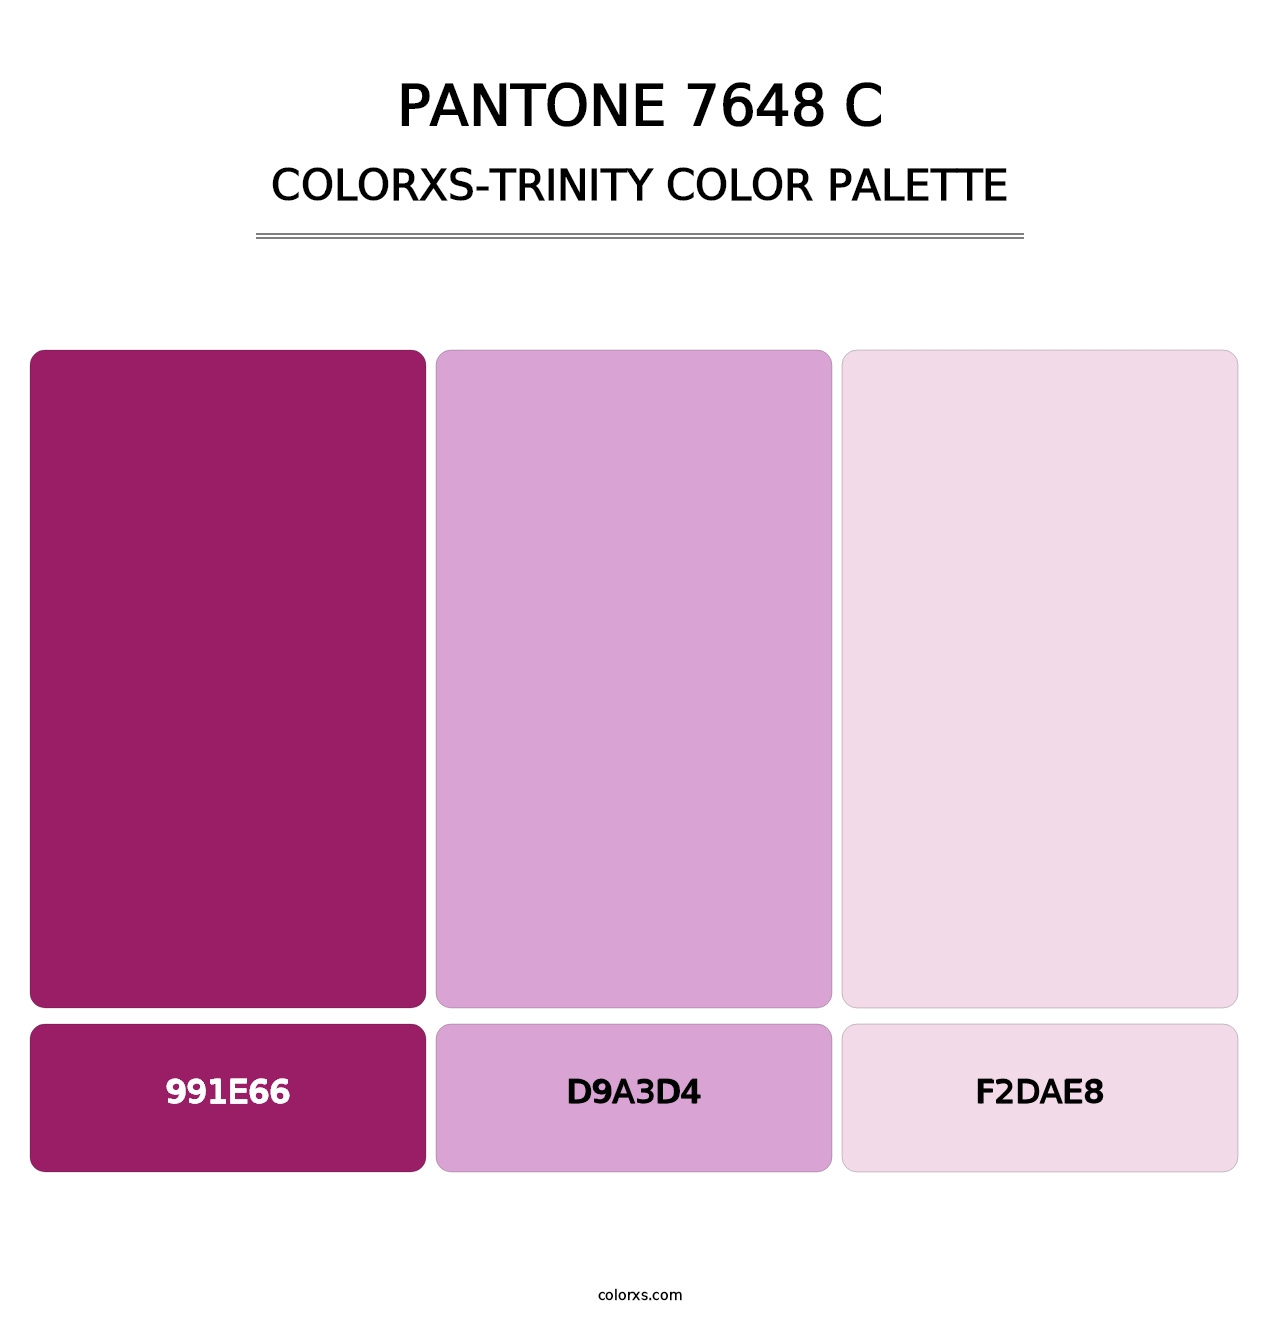 PANTONE 7648 C - Colorxs Trinity Palette